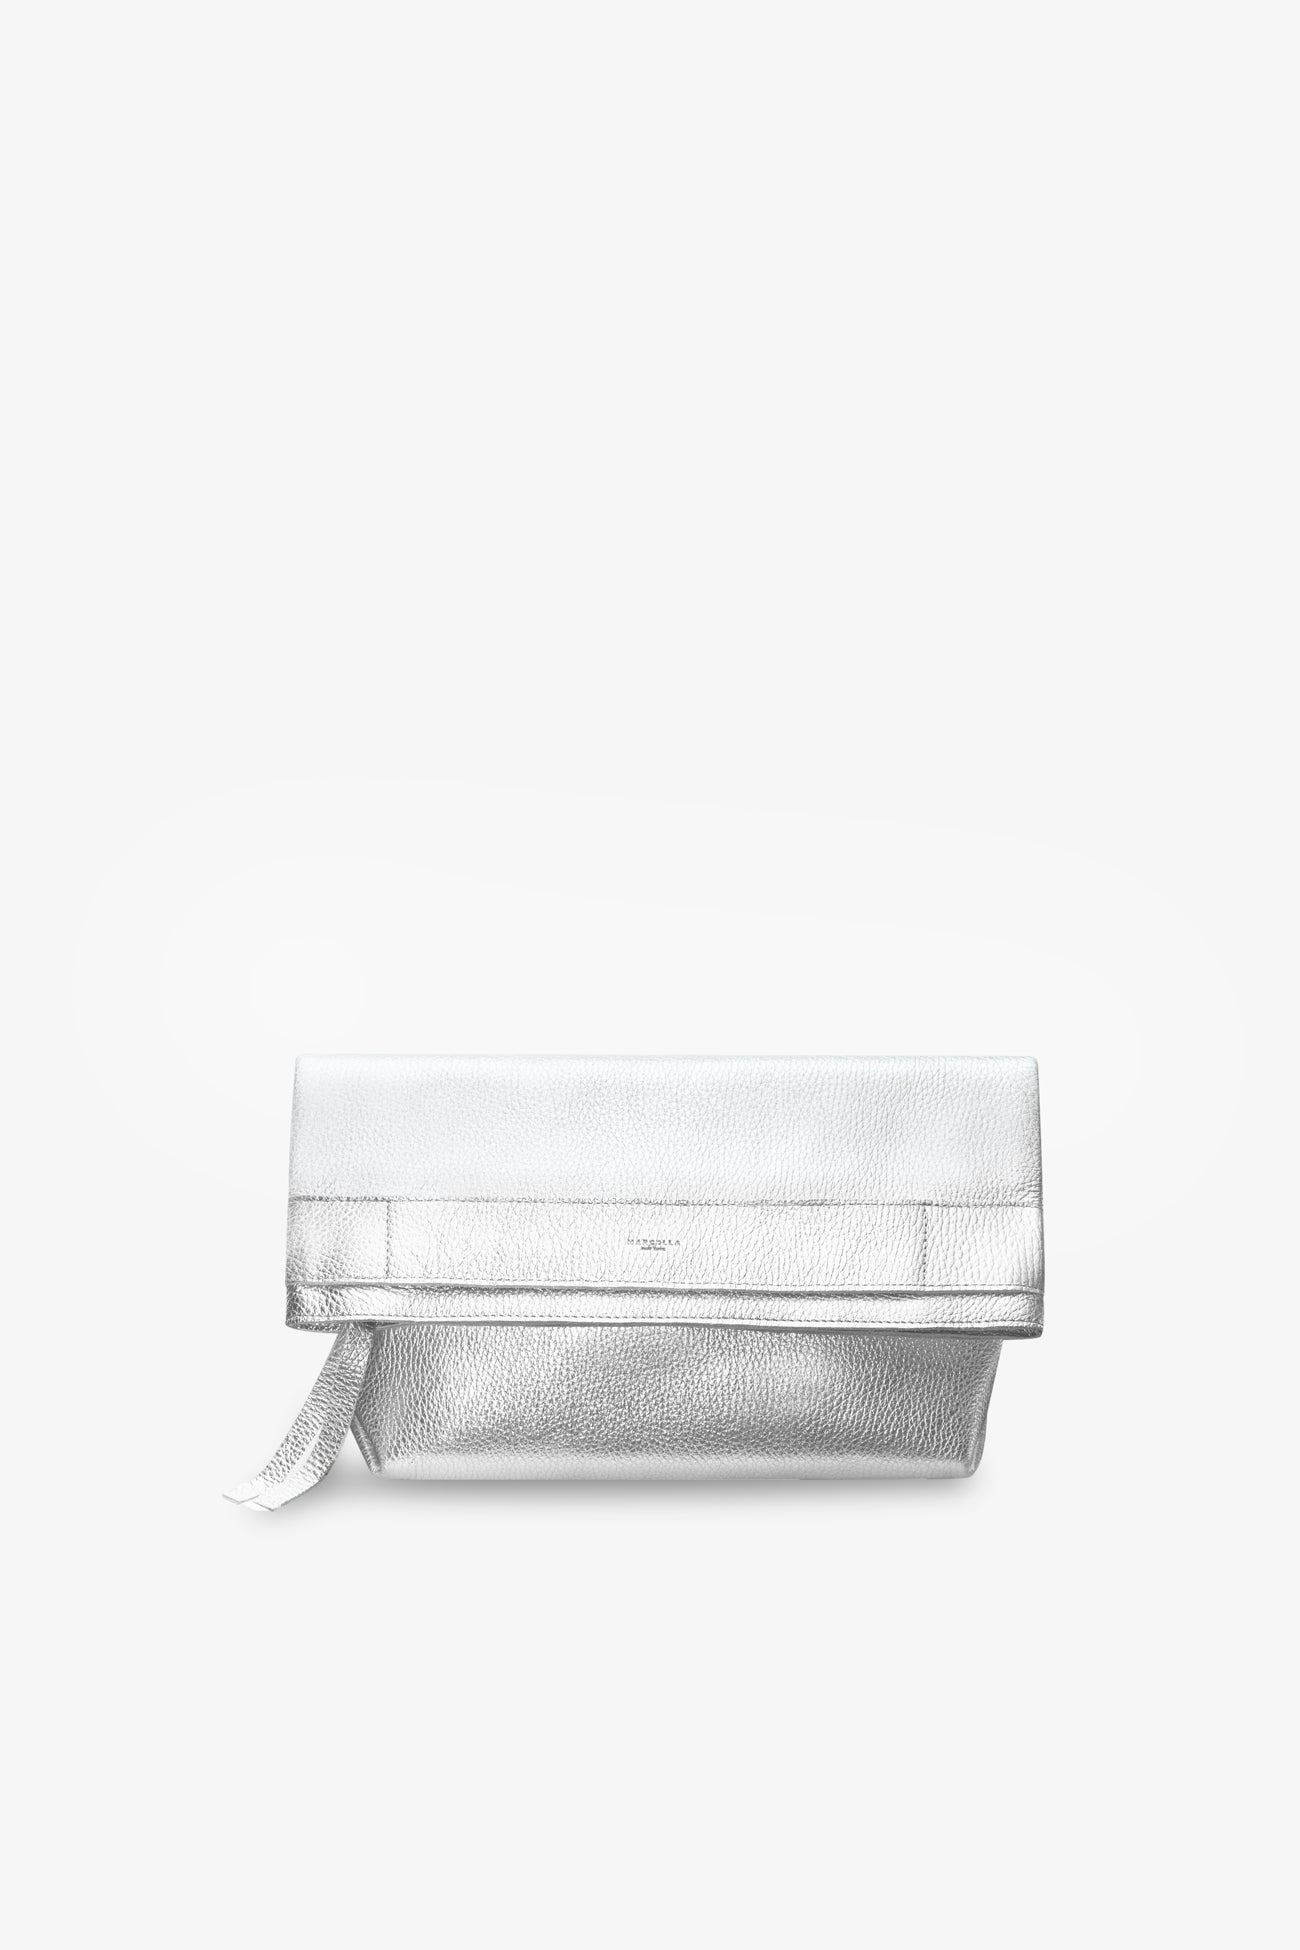 Metallic Silver Leather Foldover Bag - Benson Clutch | Marcella